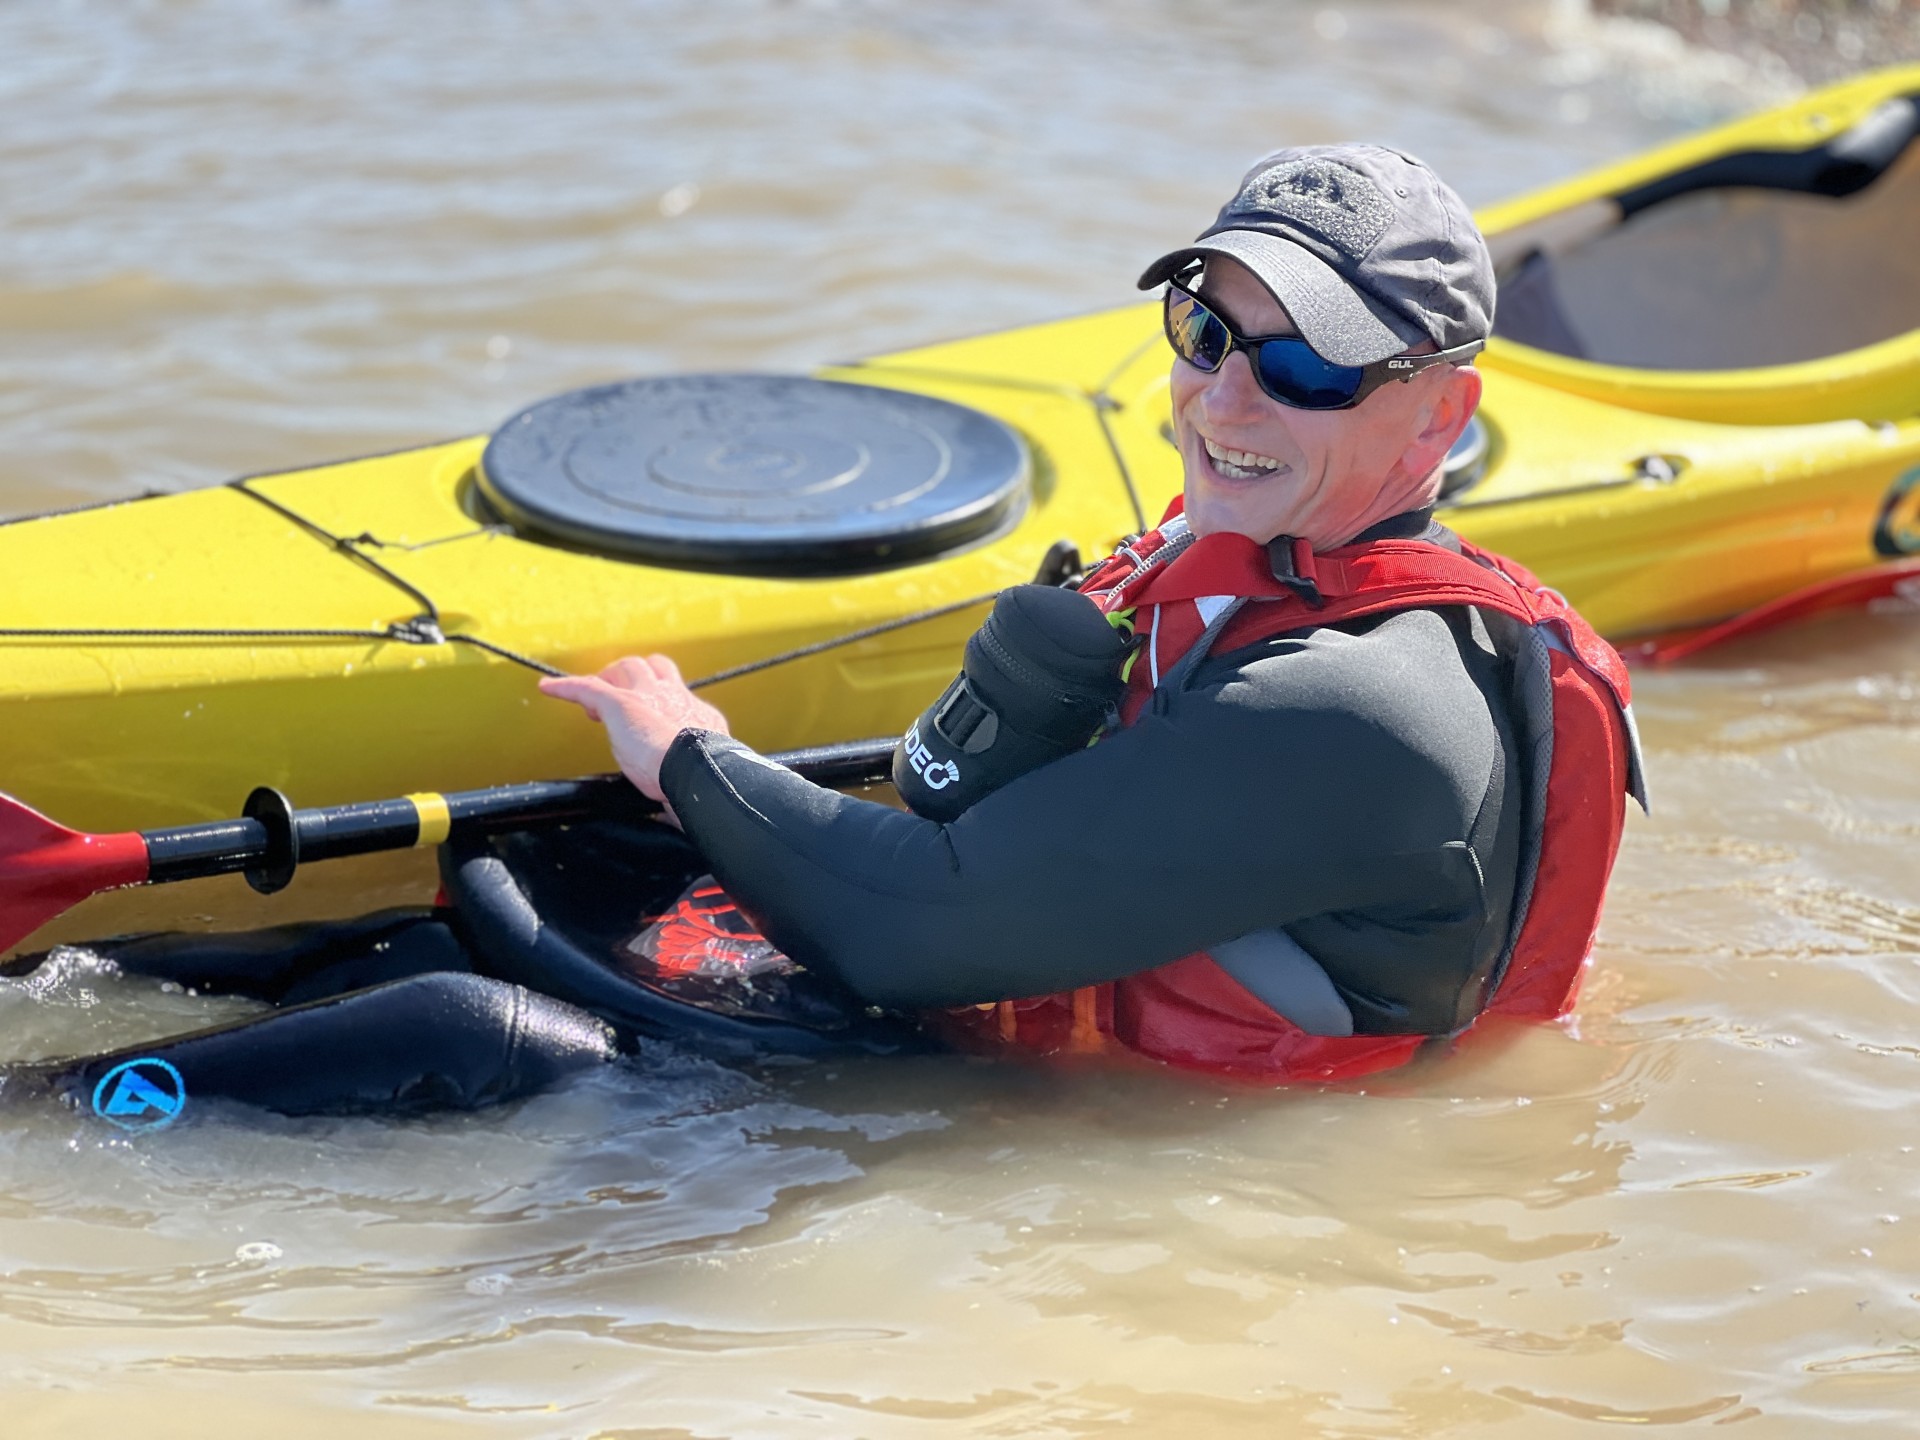 Sea kayaker in the water next to his kayak smiling.